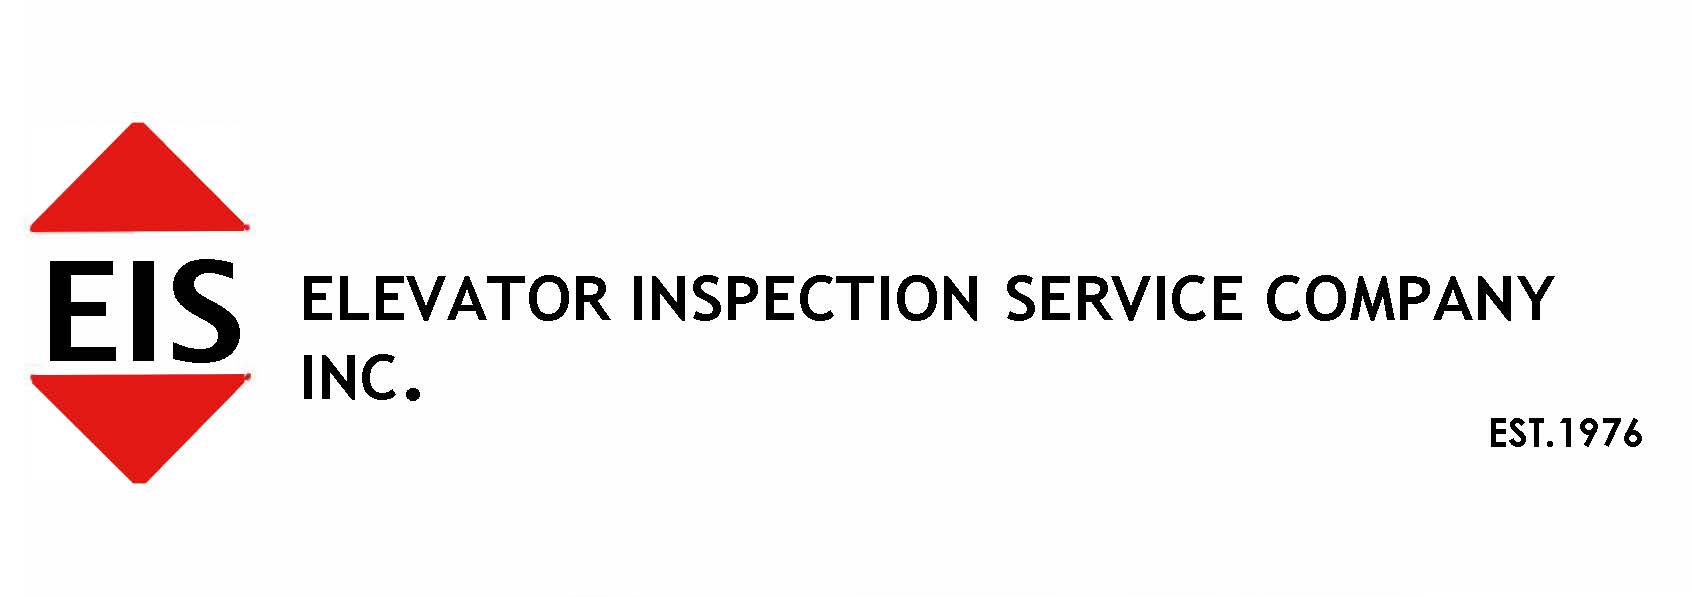 Elevator Inspection Service Company, Inc.